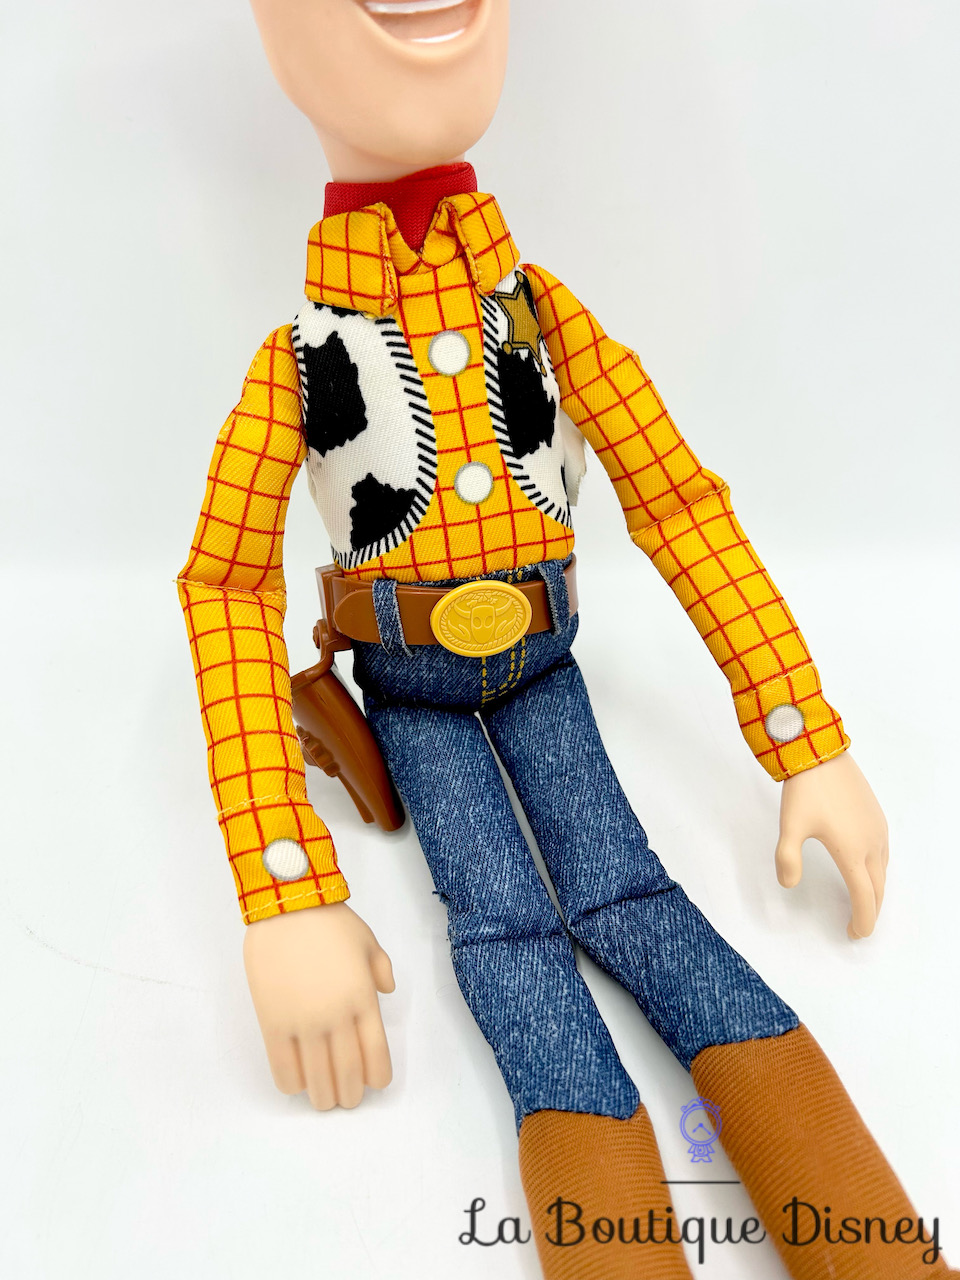 Woody figurine parlante - Figurine de collection - Achat & prix